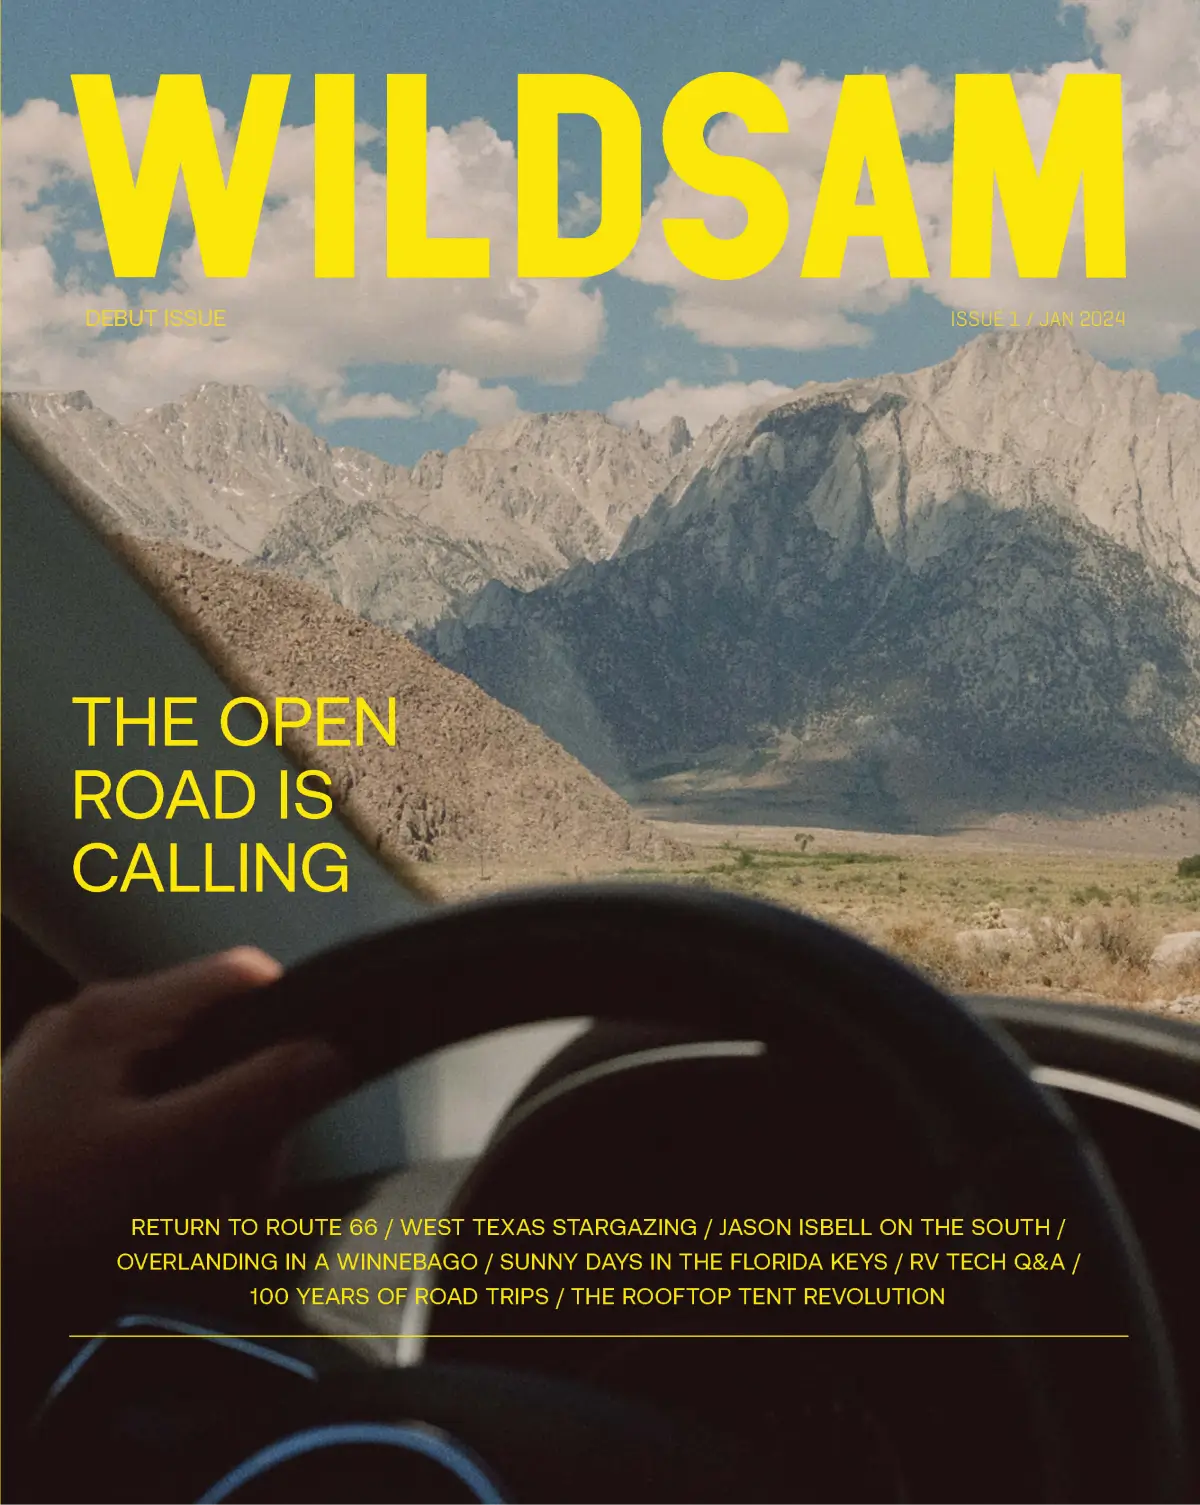 Magazine cover, road trip theme, steering wheel, mountains view.